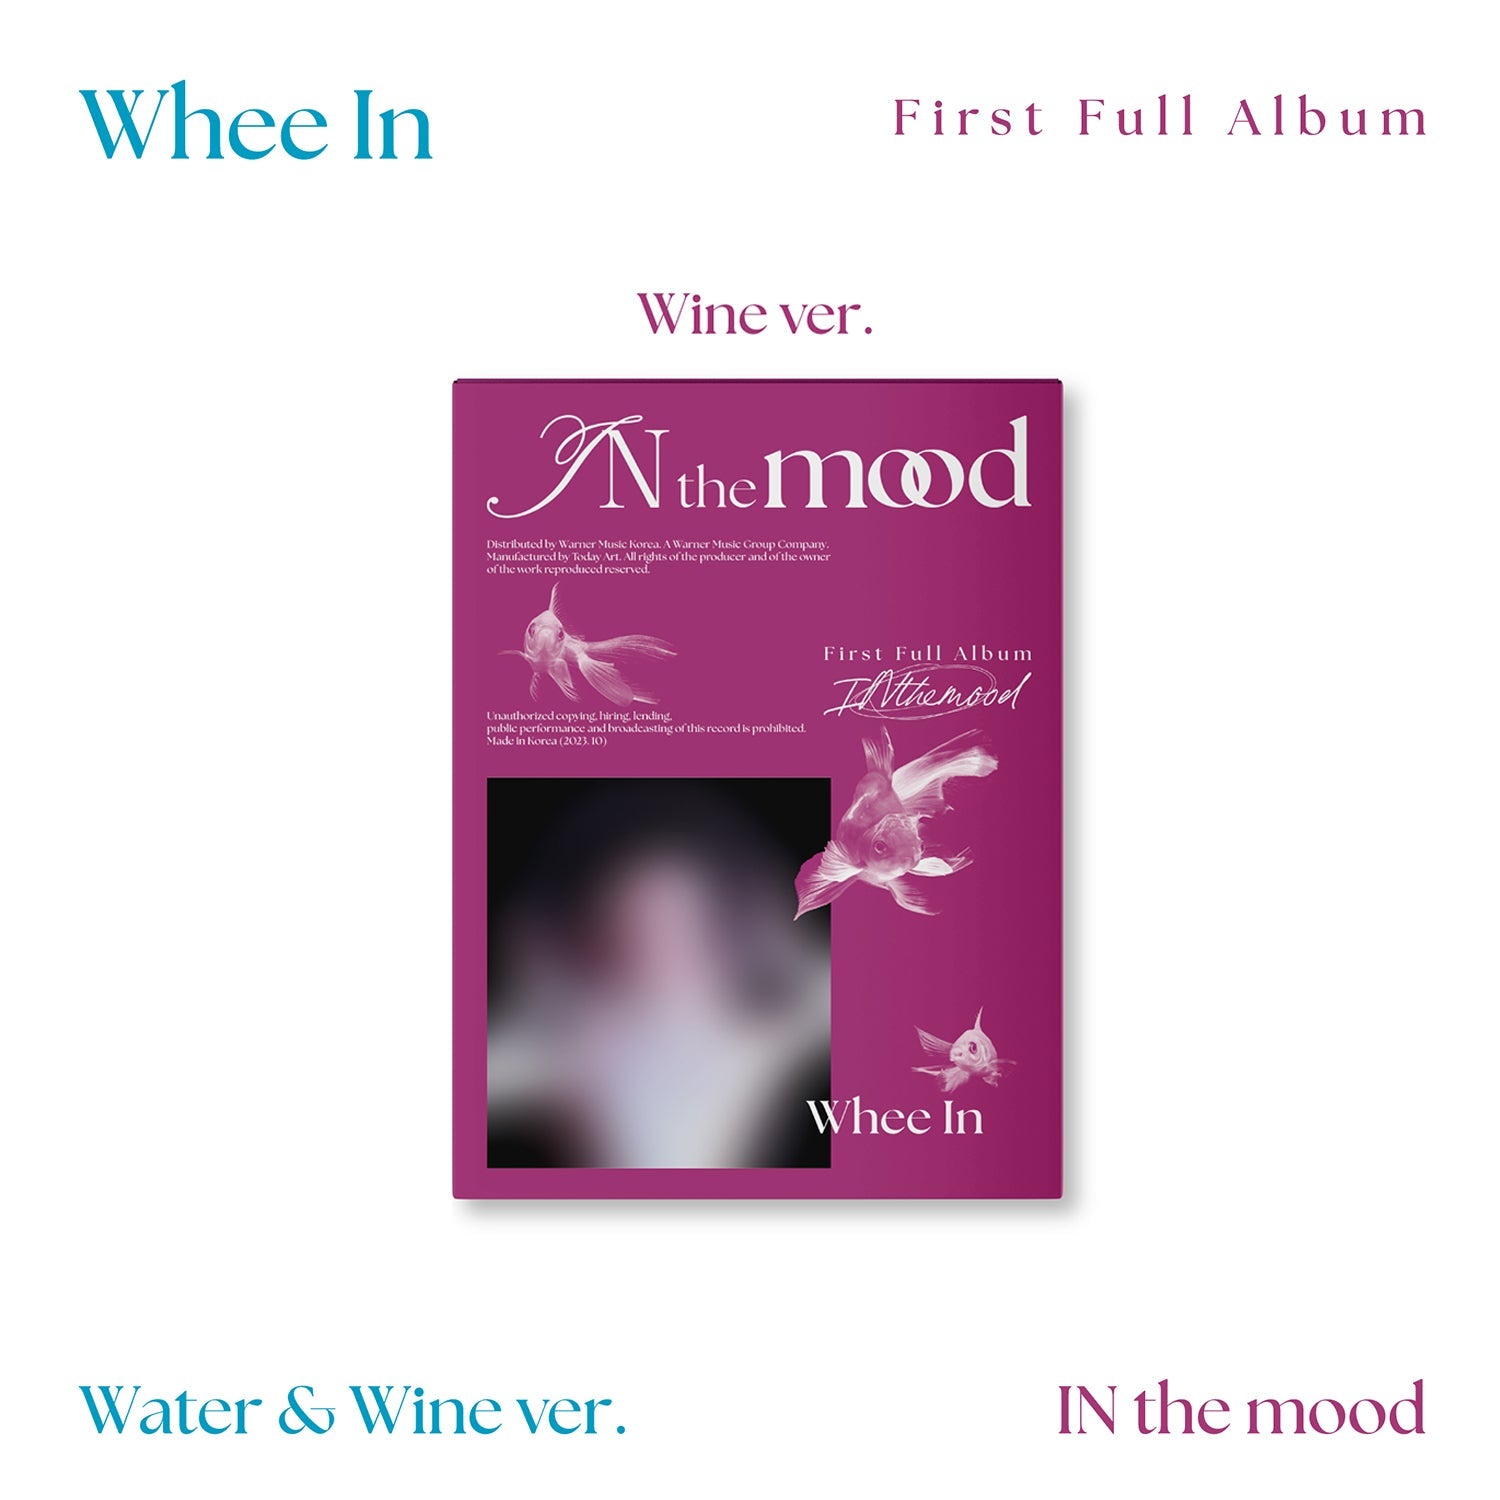 WHEE IN 1ST FULL ALBUM 'IN THE MOOD' (PHOTOBOOK) WINE VERSION COVER